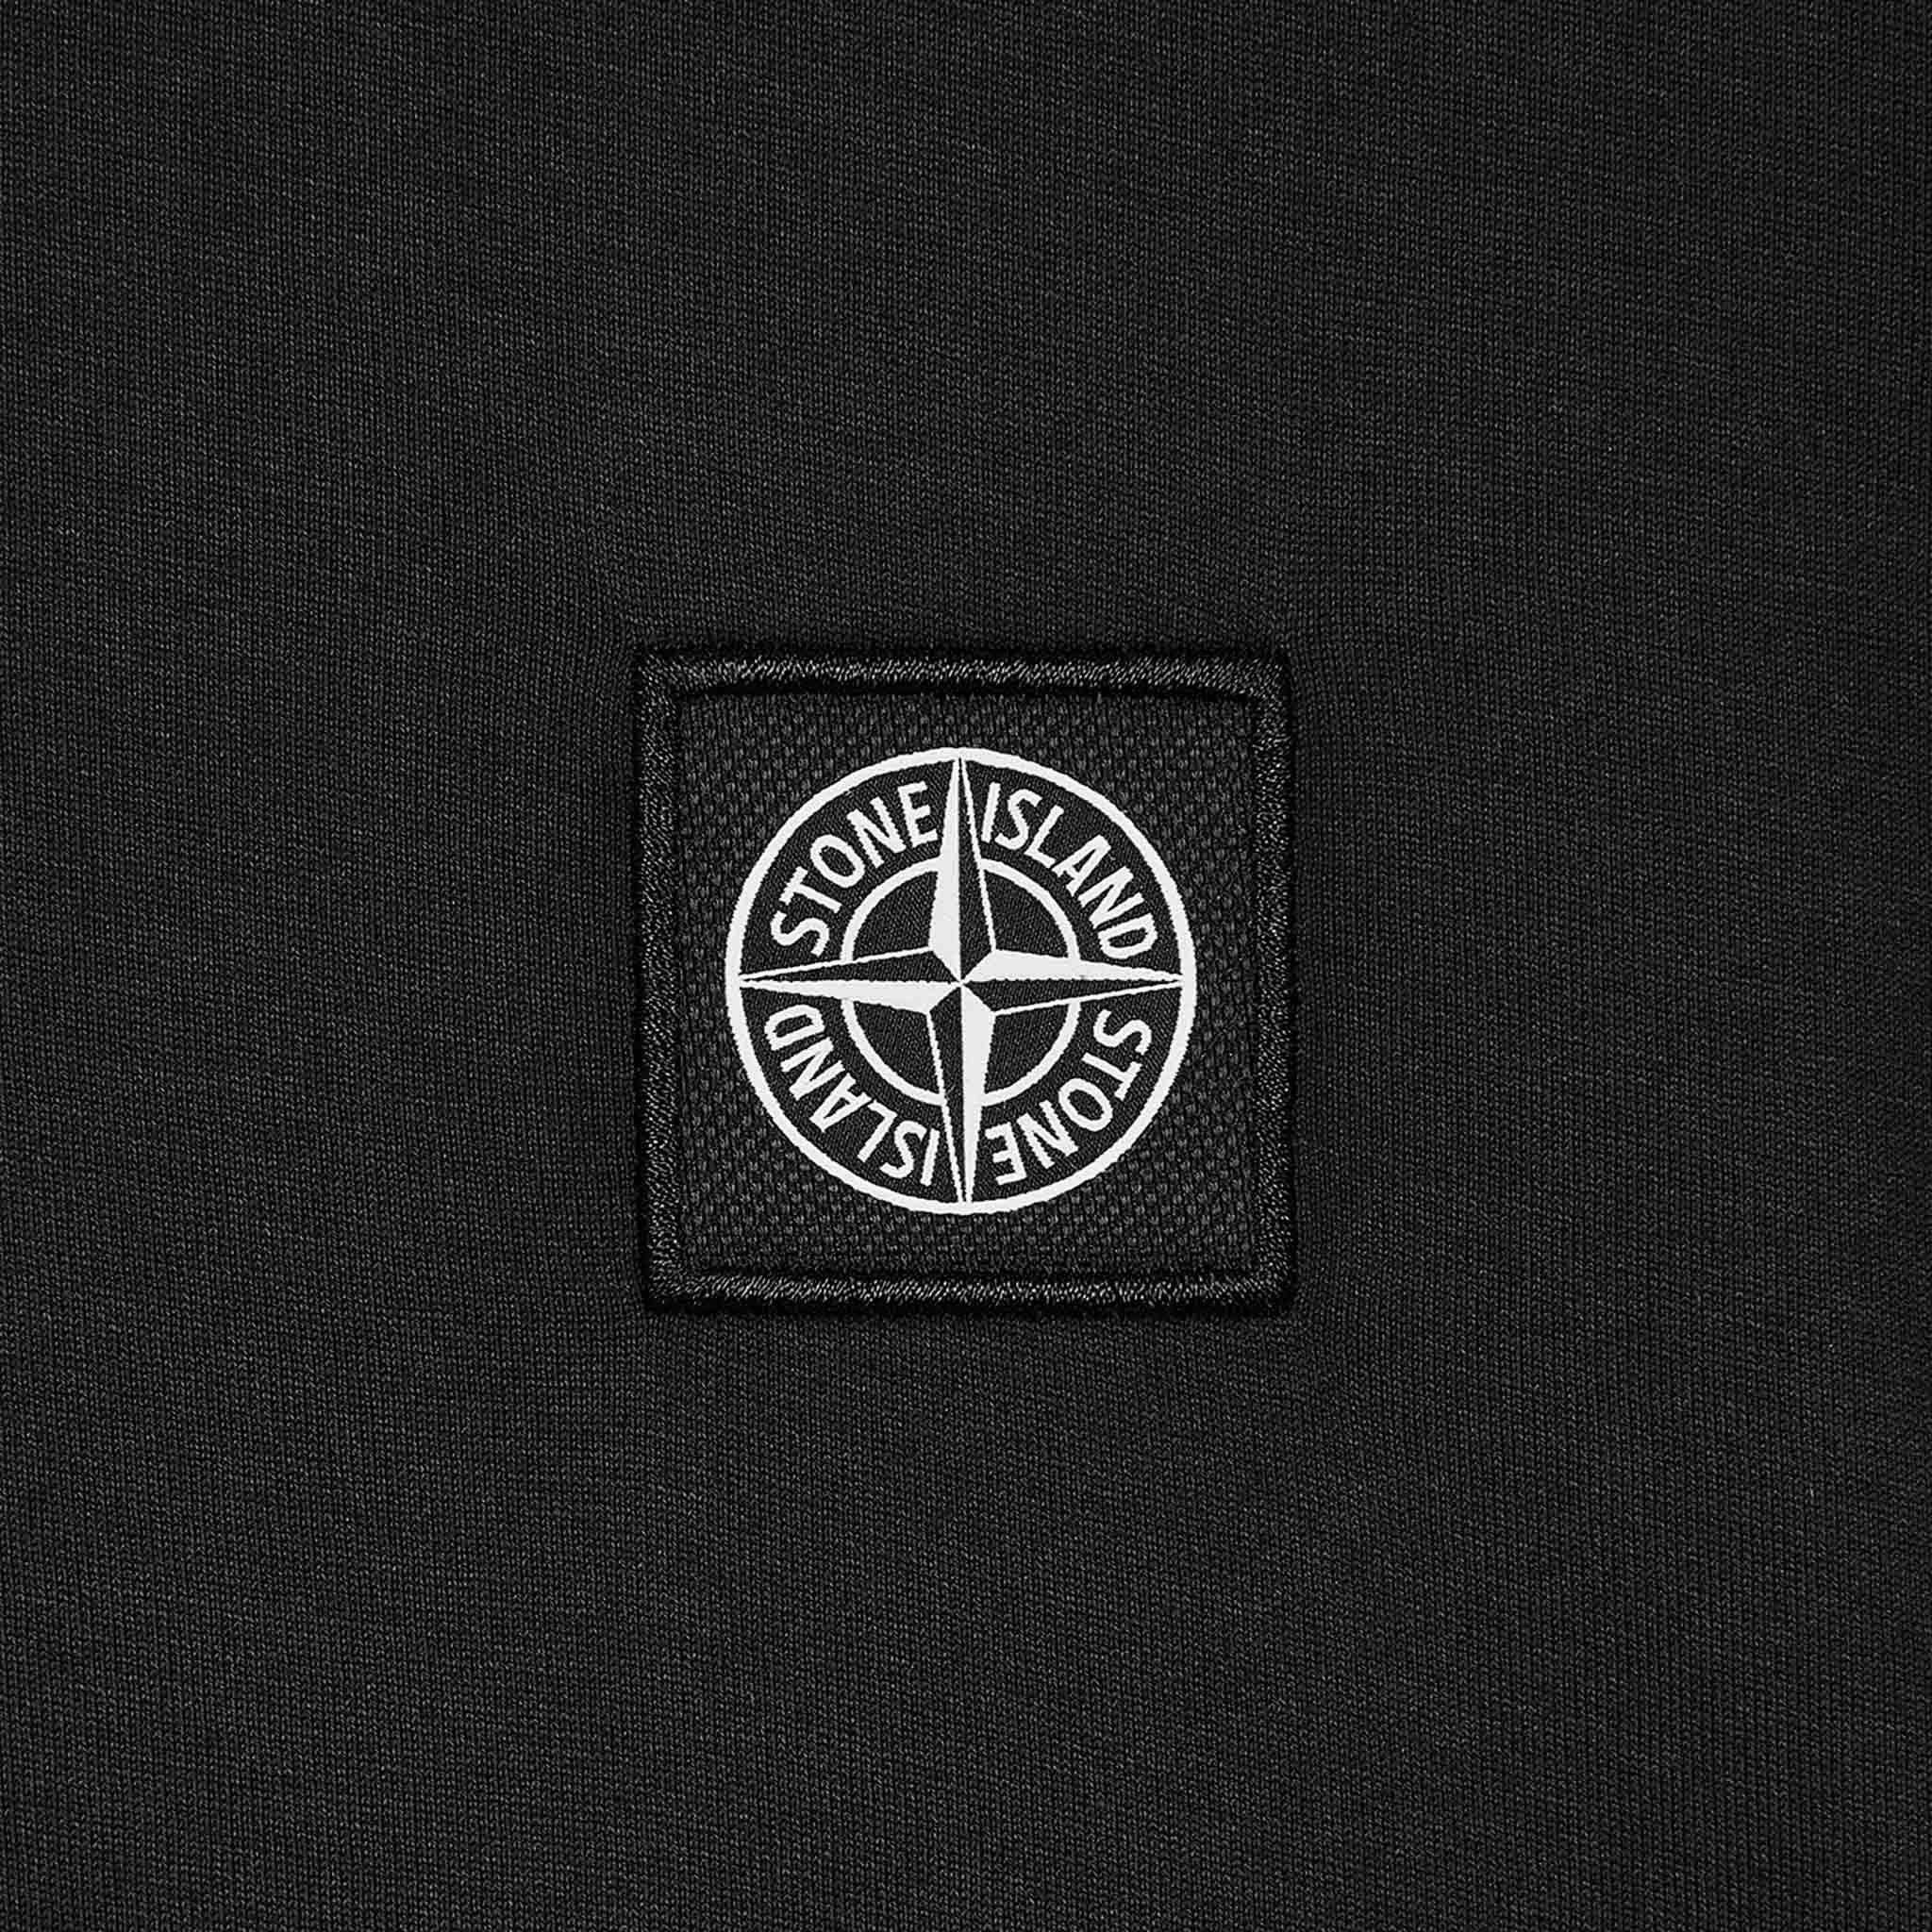 Stone Island Compass T-Shirt in Black